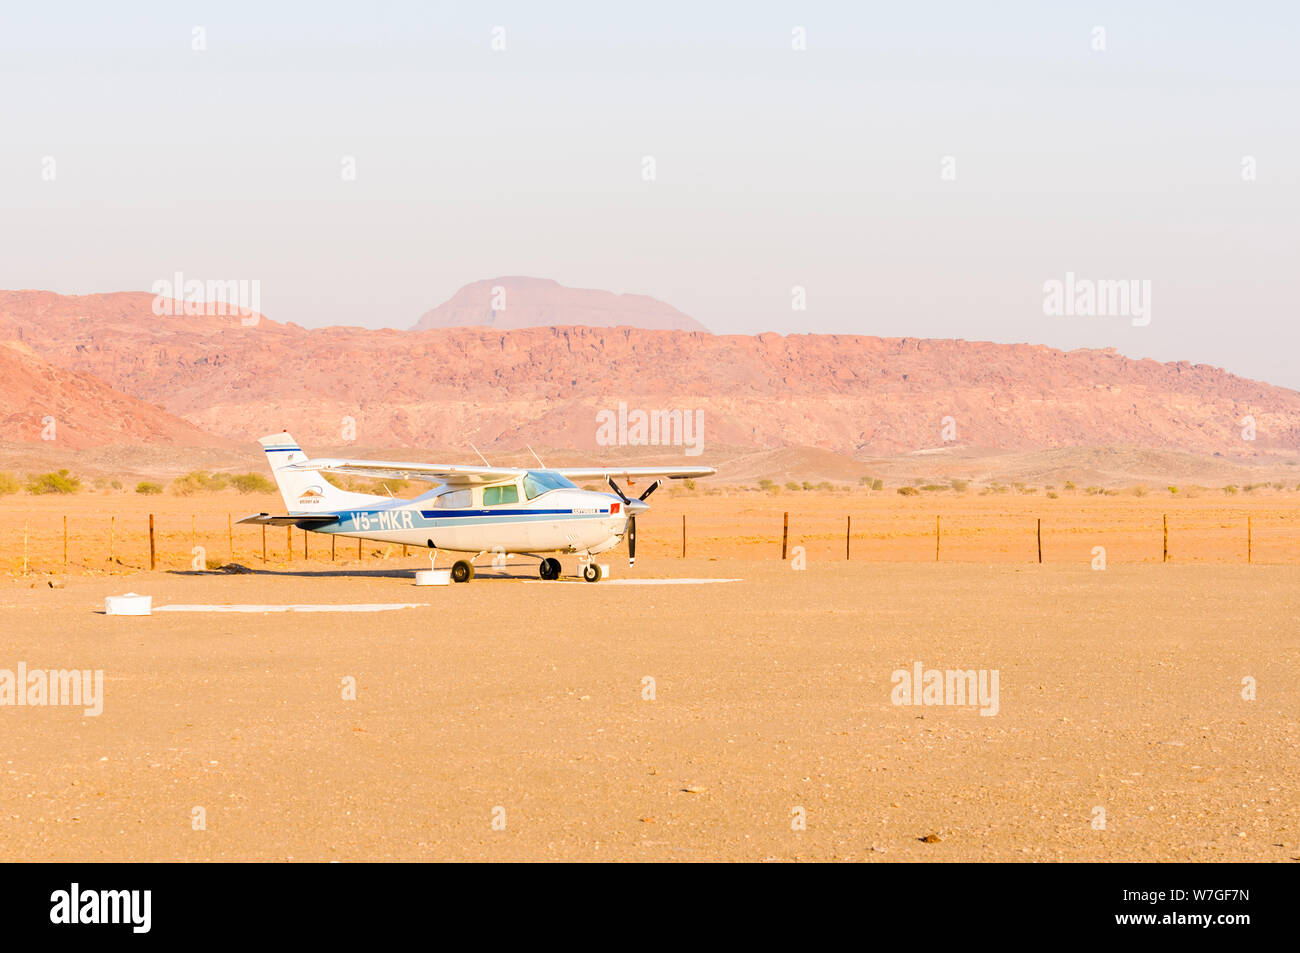 Cessna 210 N Centurion II V5-PMM von Wüste Luft, Namutoni Flughafen, Etosha National Park, Namibia betrieben Stockfoto